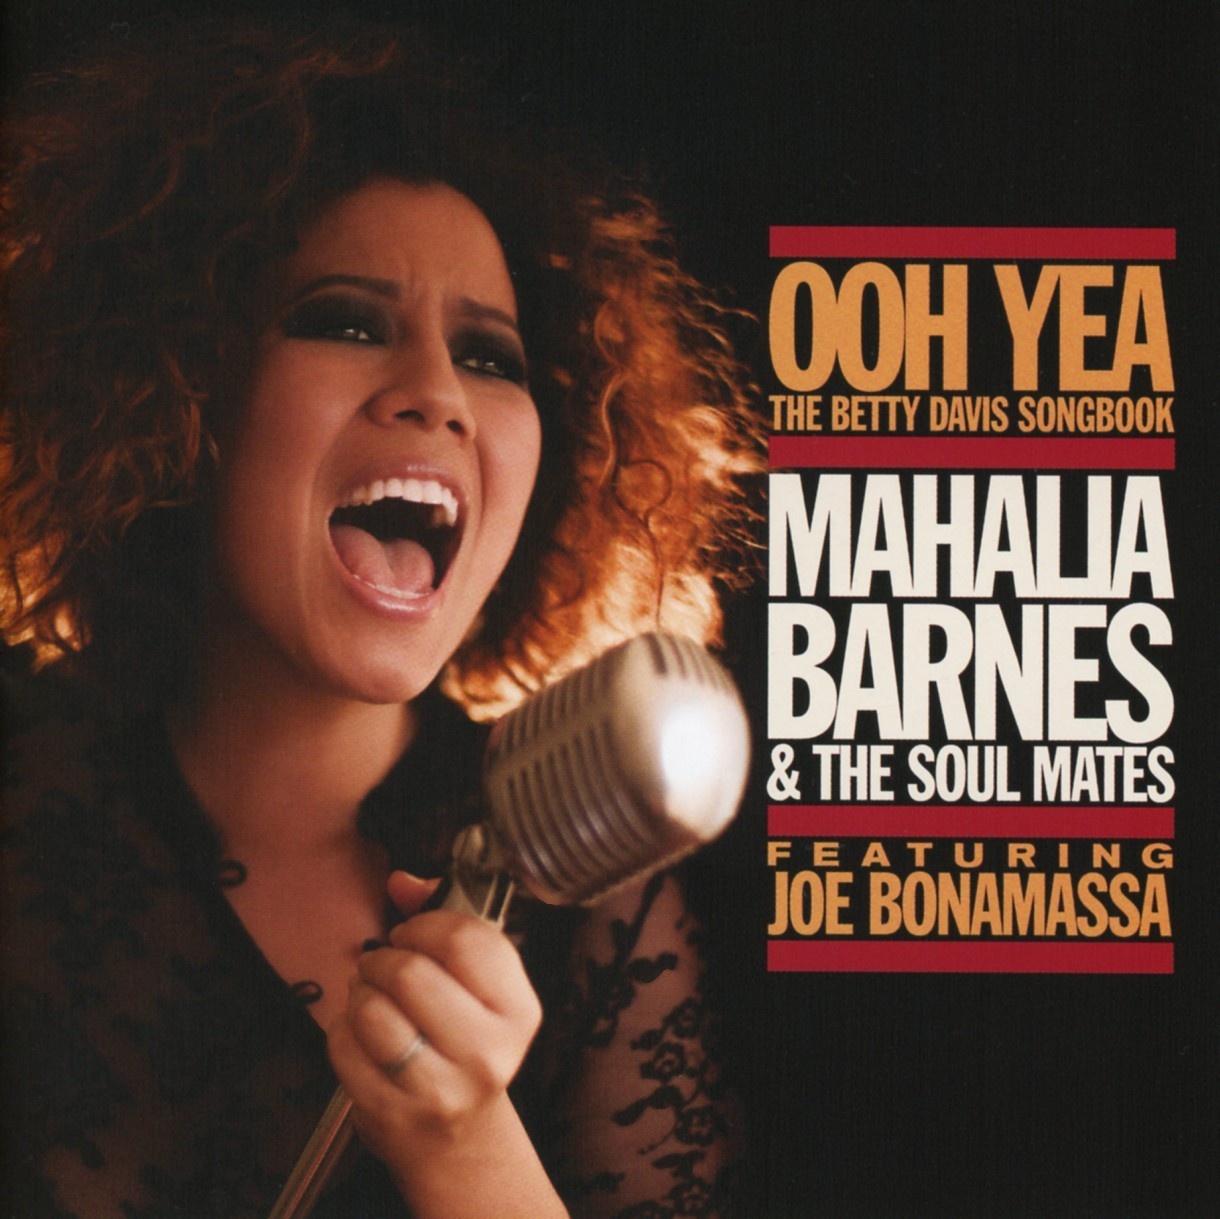 Ooh Yea-The Betty Davis Songbook Feat. J.Bonamassa - Mahalia Barnes & The Soul Mates. (CD)